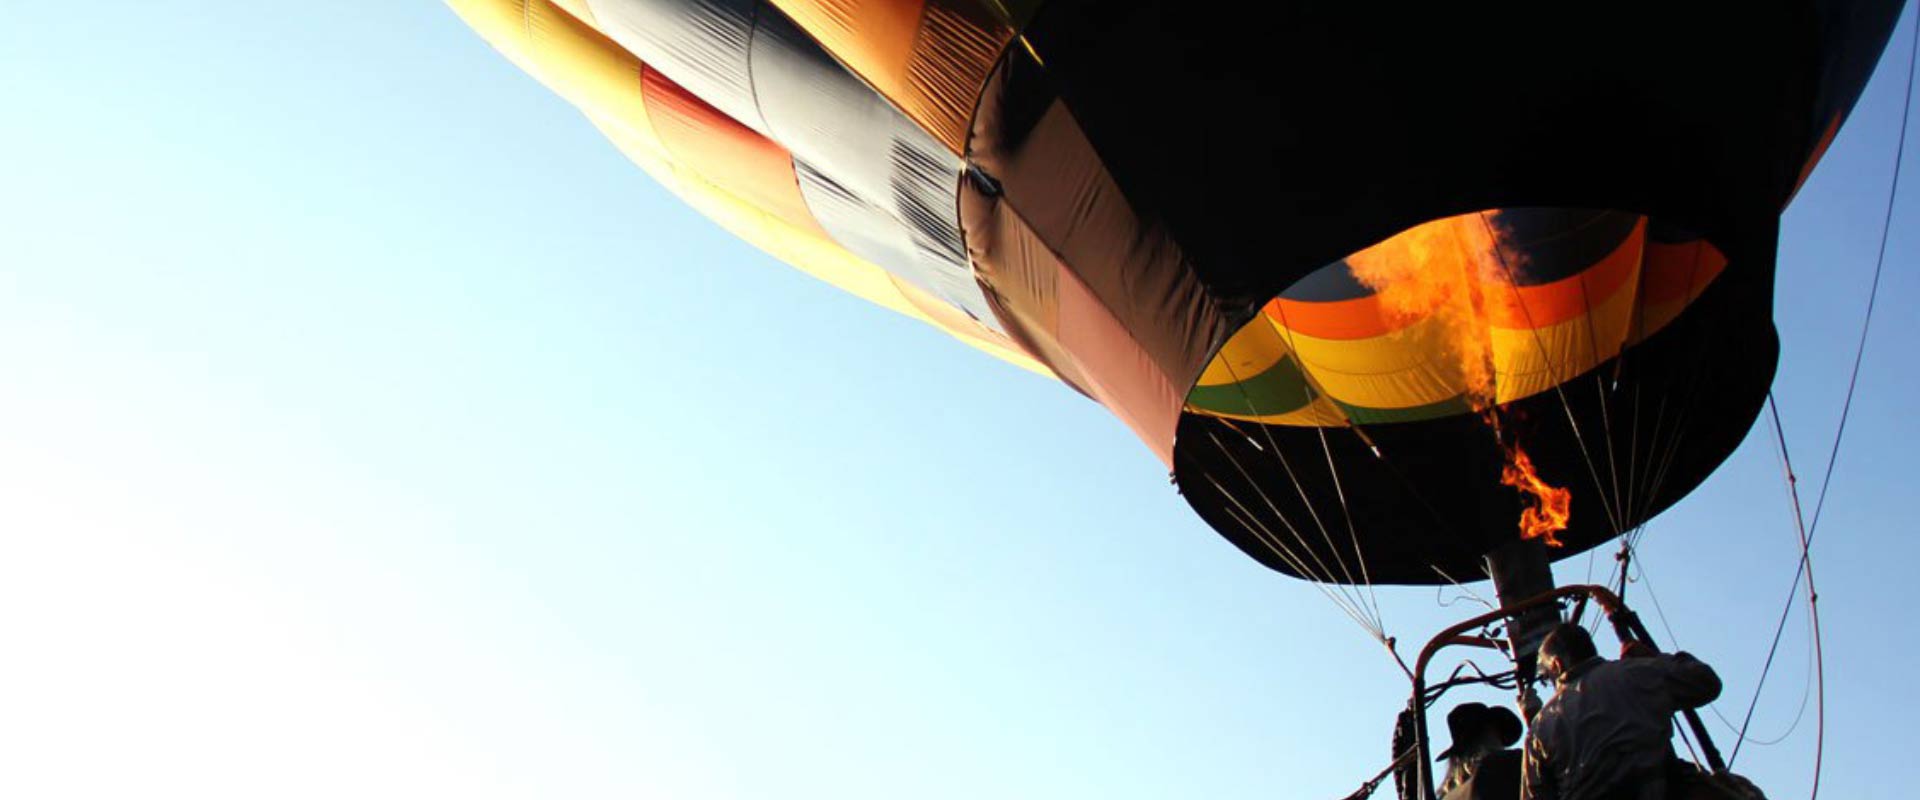 Hot Air Balloon Rides with Experienced Hot Air Balloon Pilots